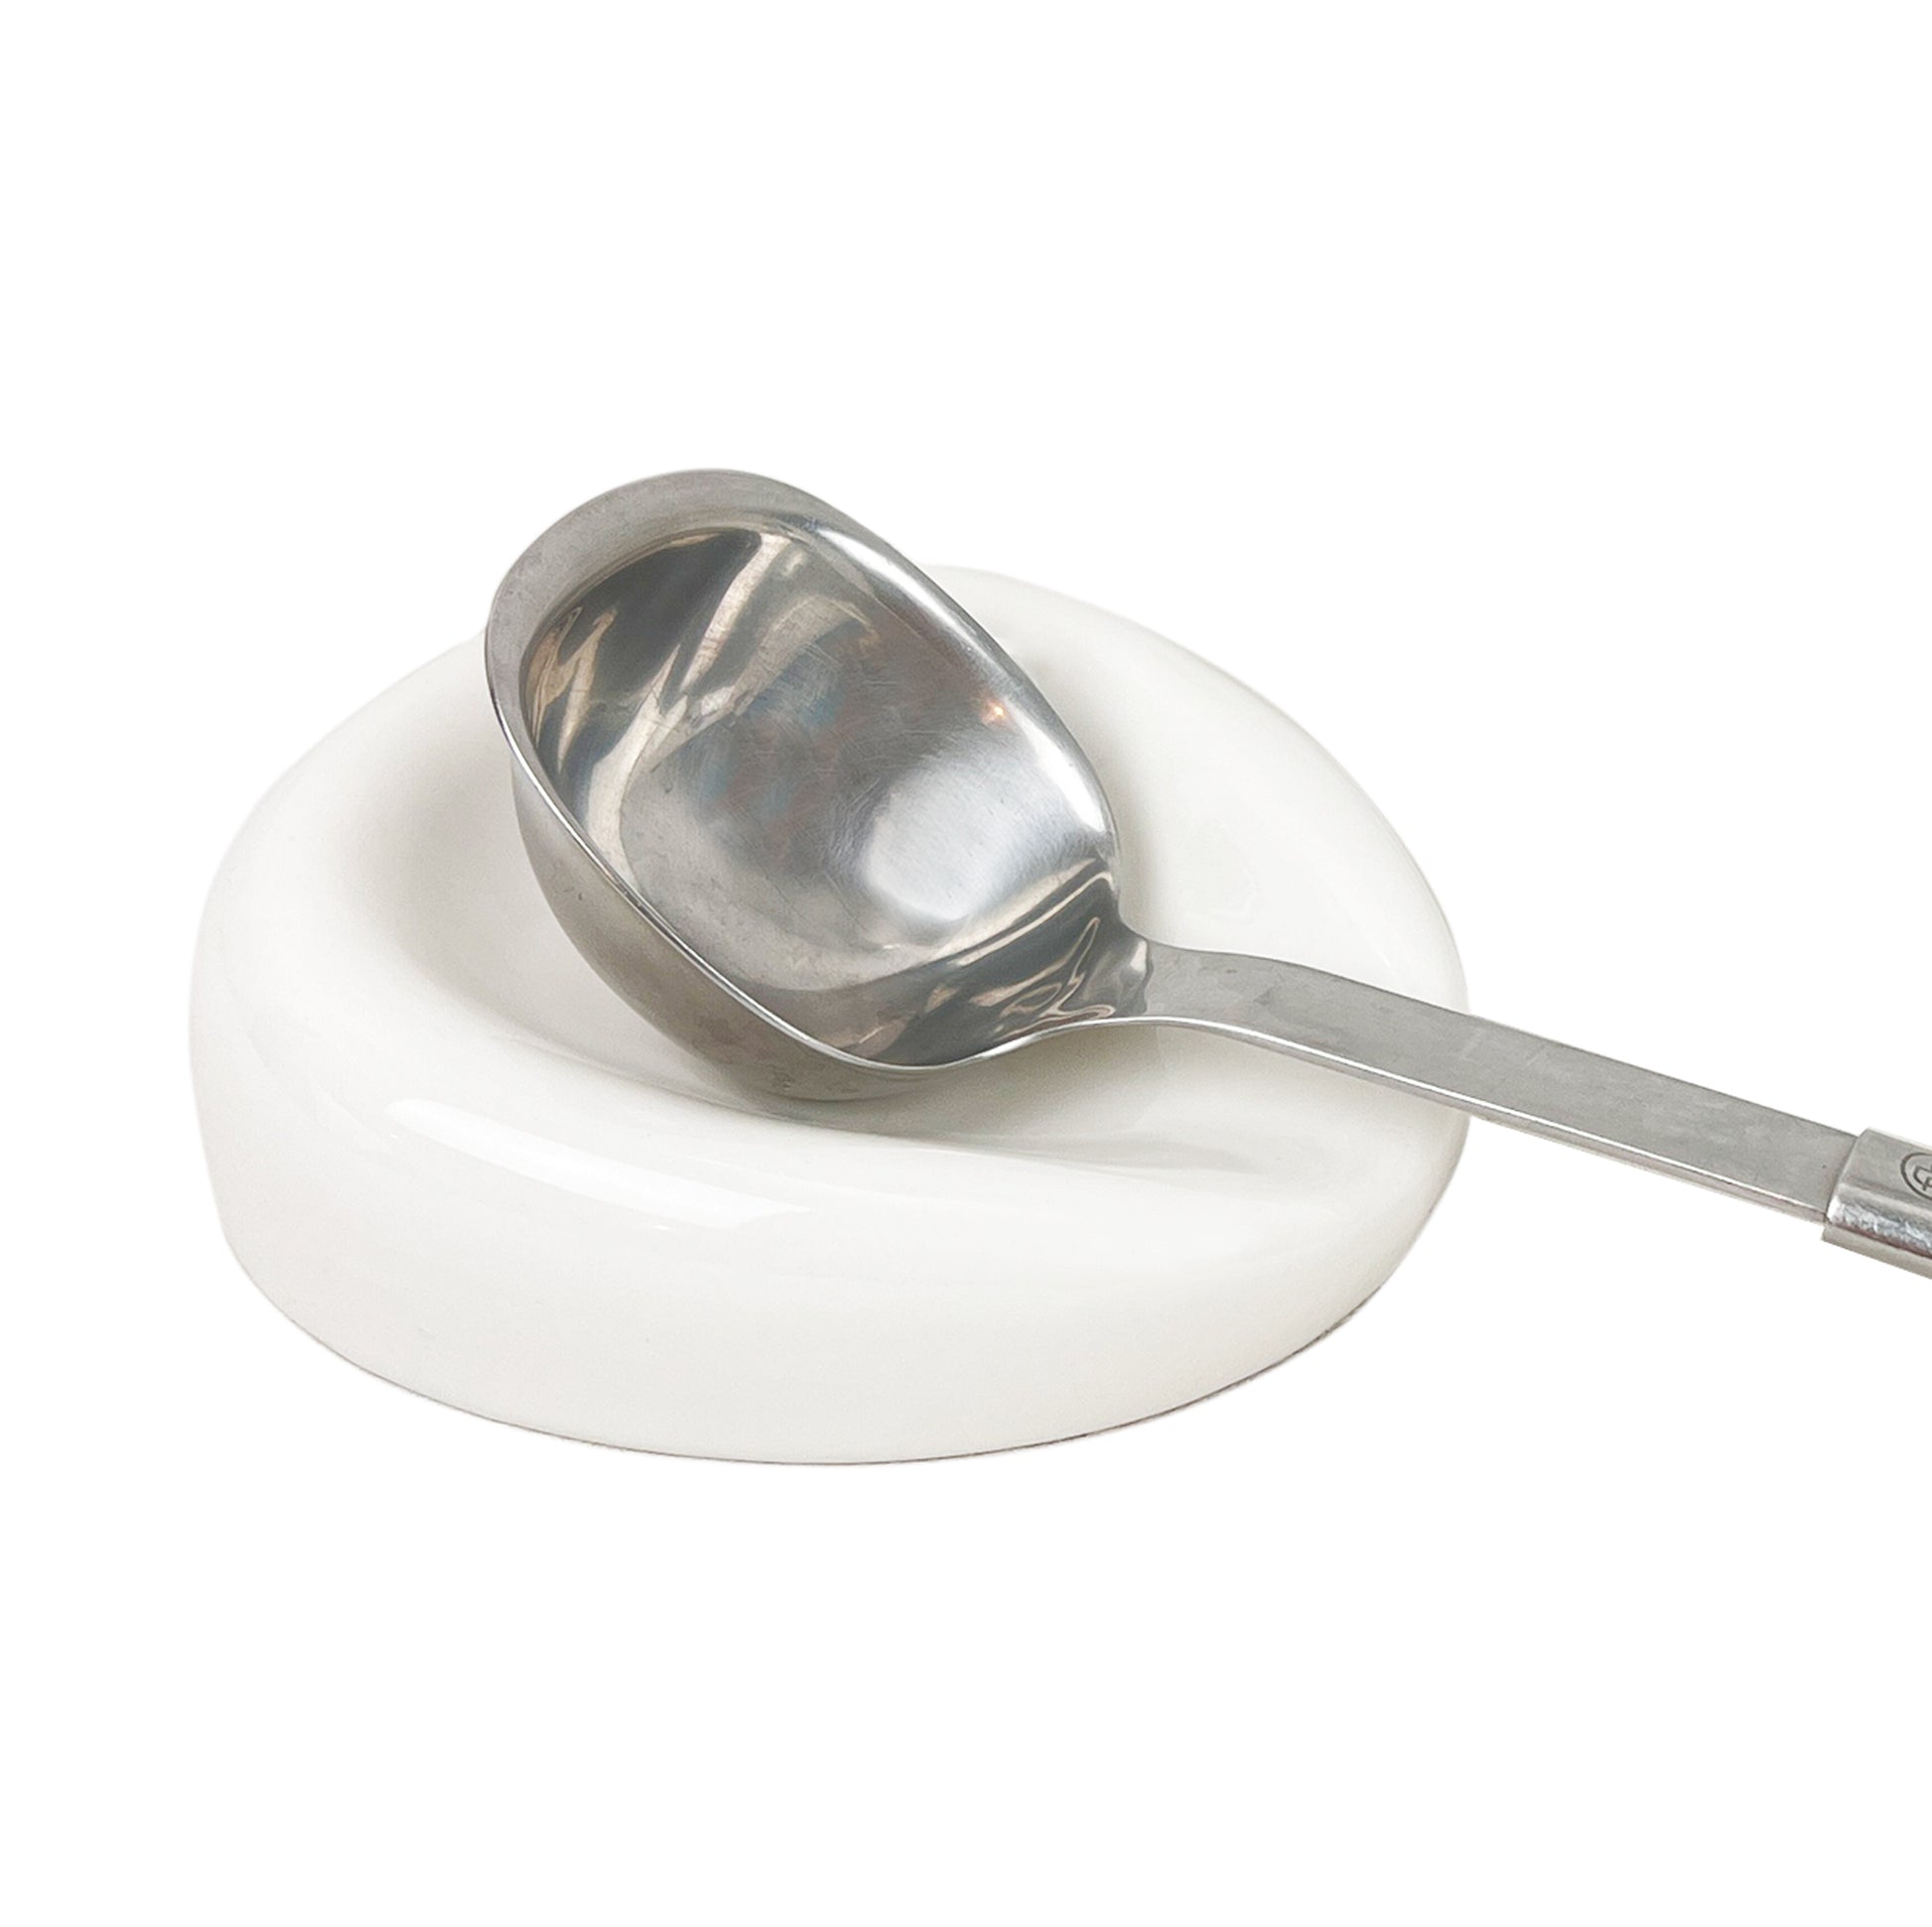 Sink Glass Cleaner Brush - Milky Spoon